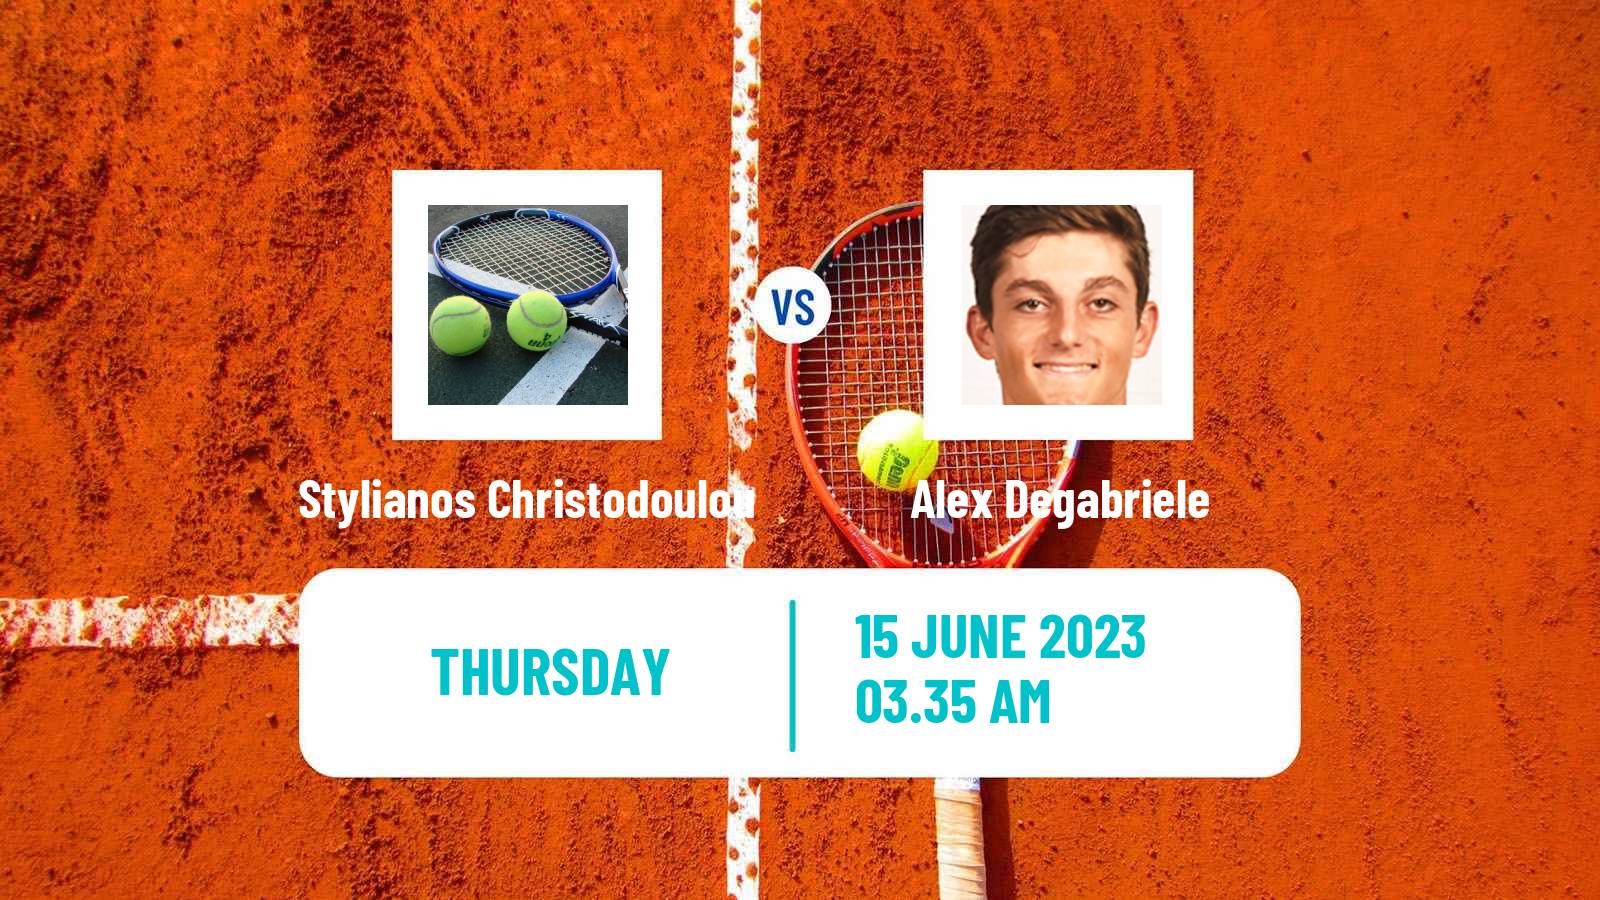 Tennis Davis Cup Group III Stylianos Christodoulou - Alex Degabriele